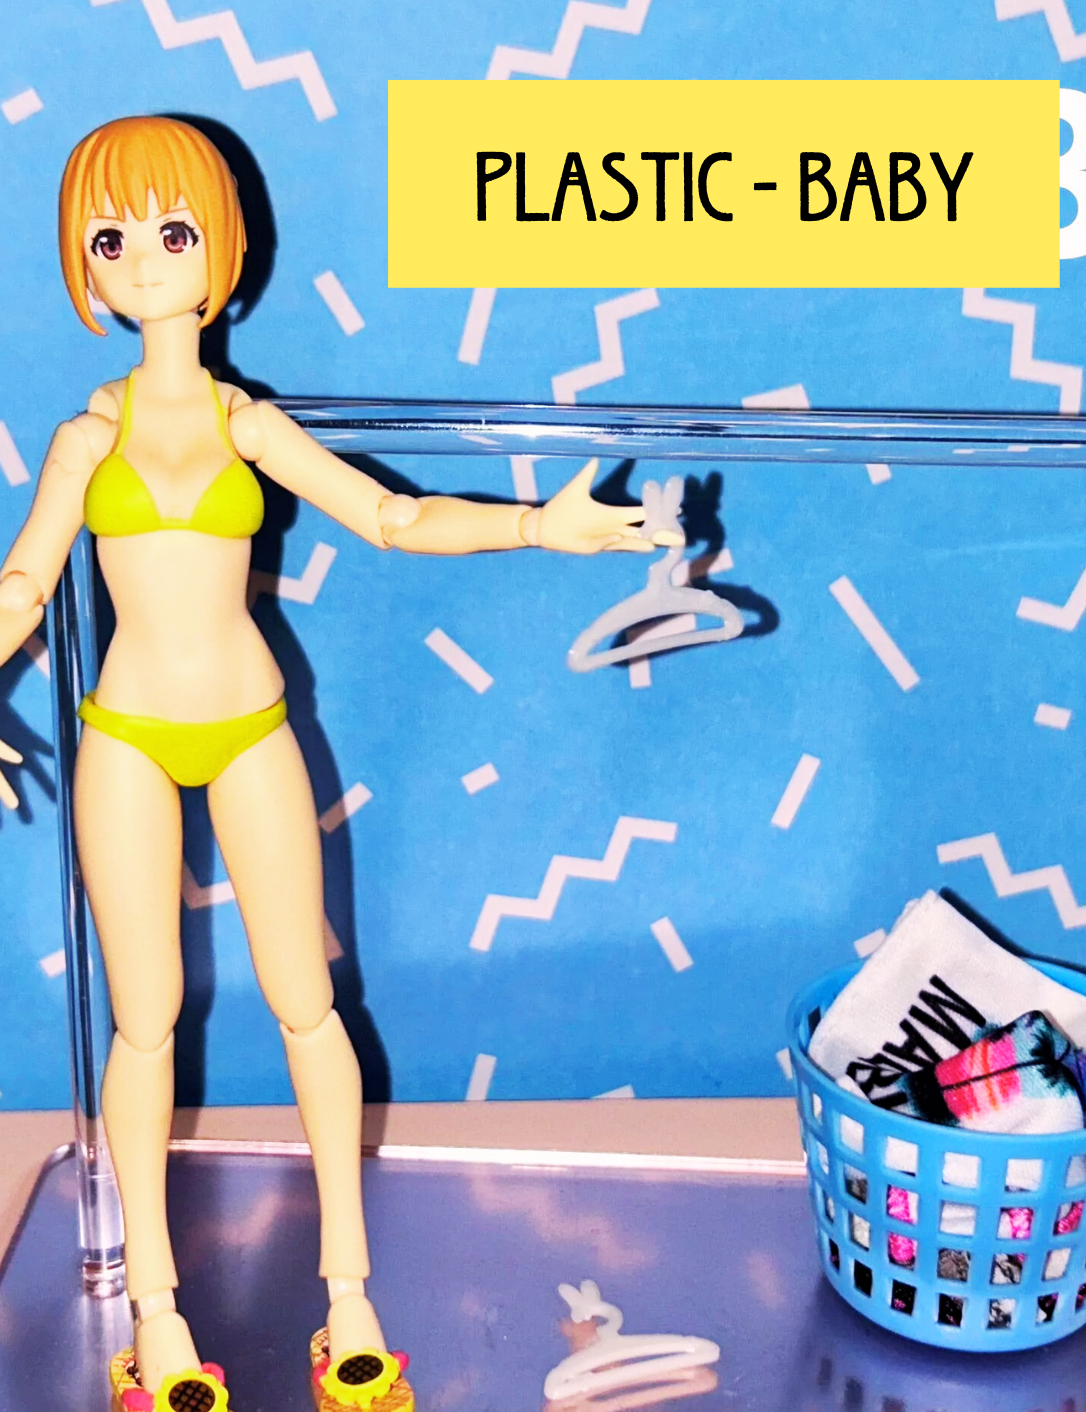 12th Scale Baby Plastic Hanger